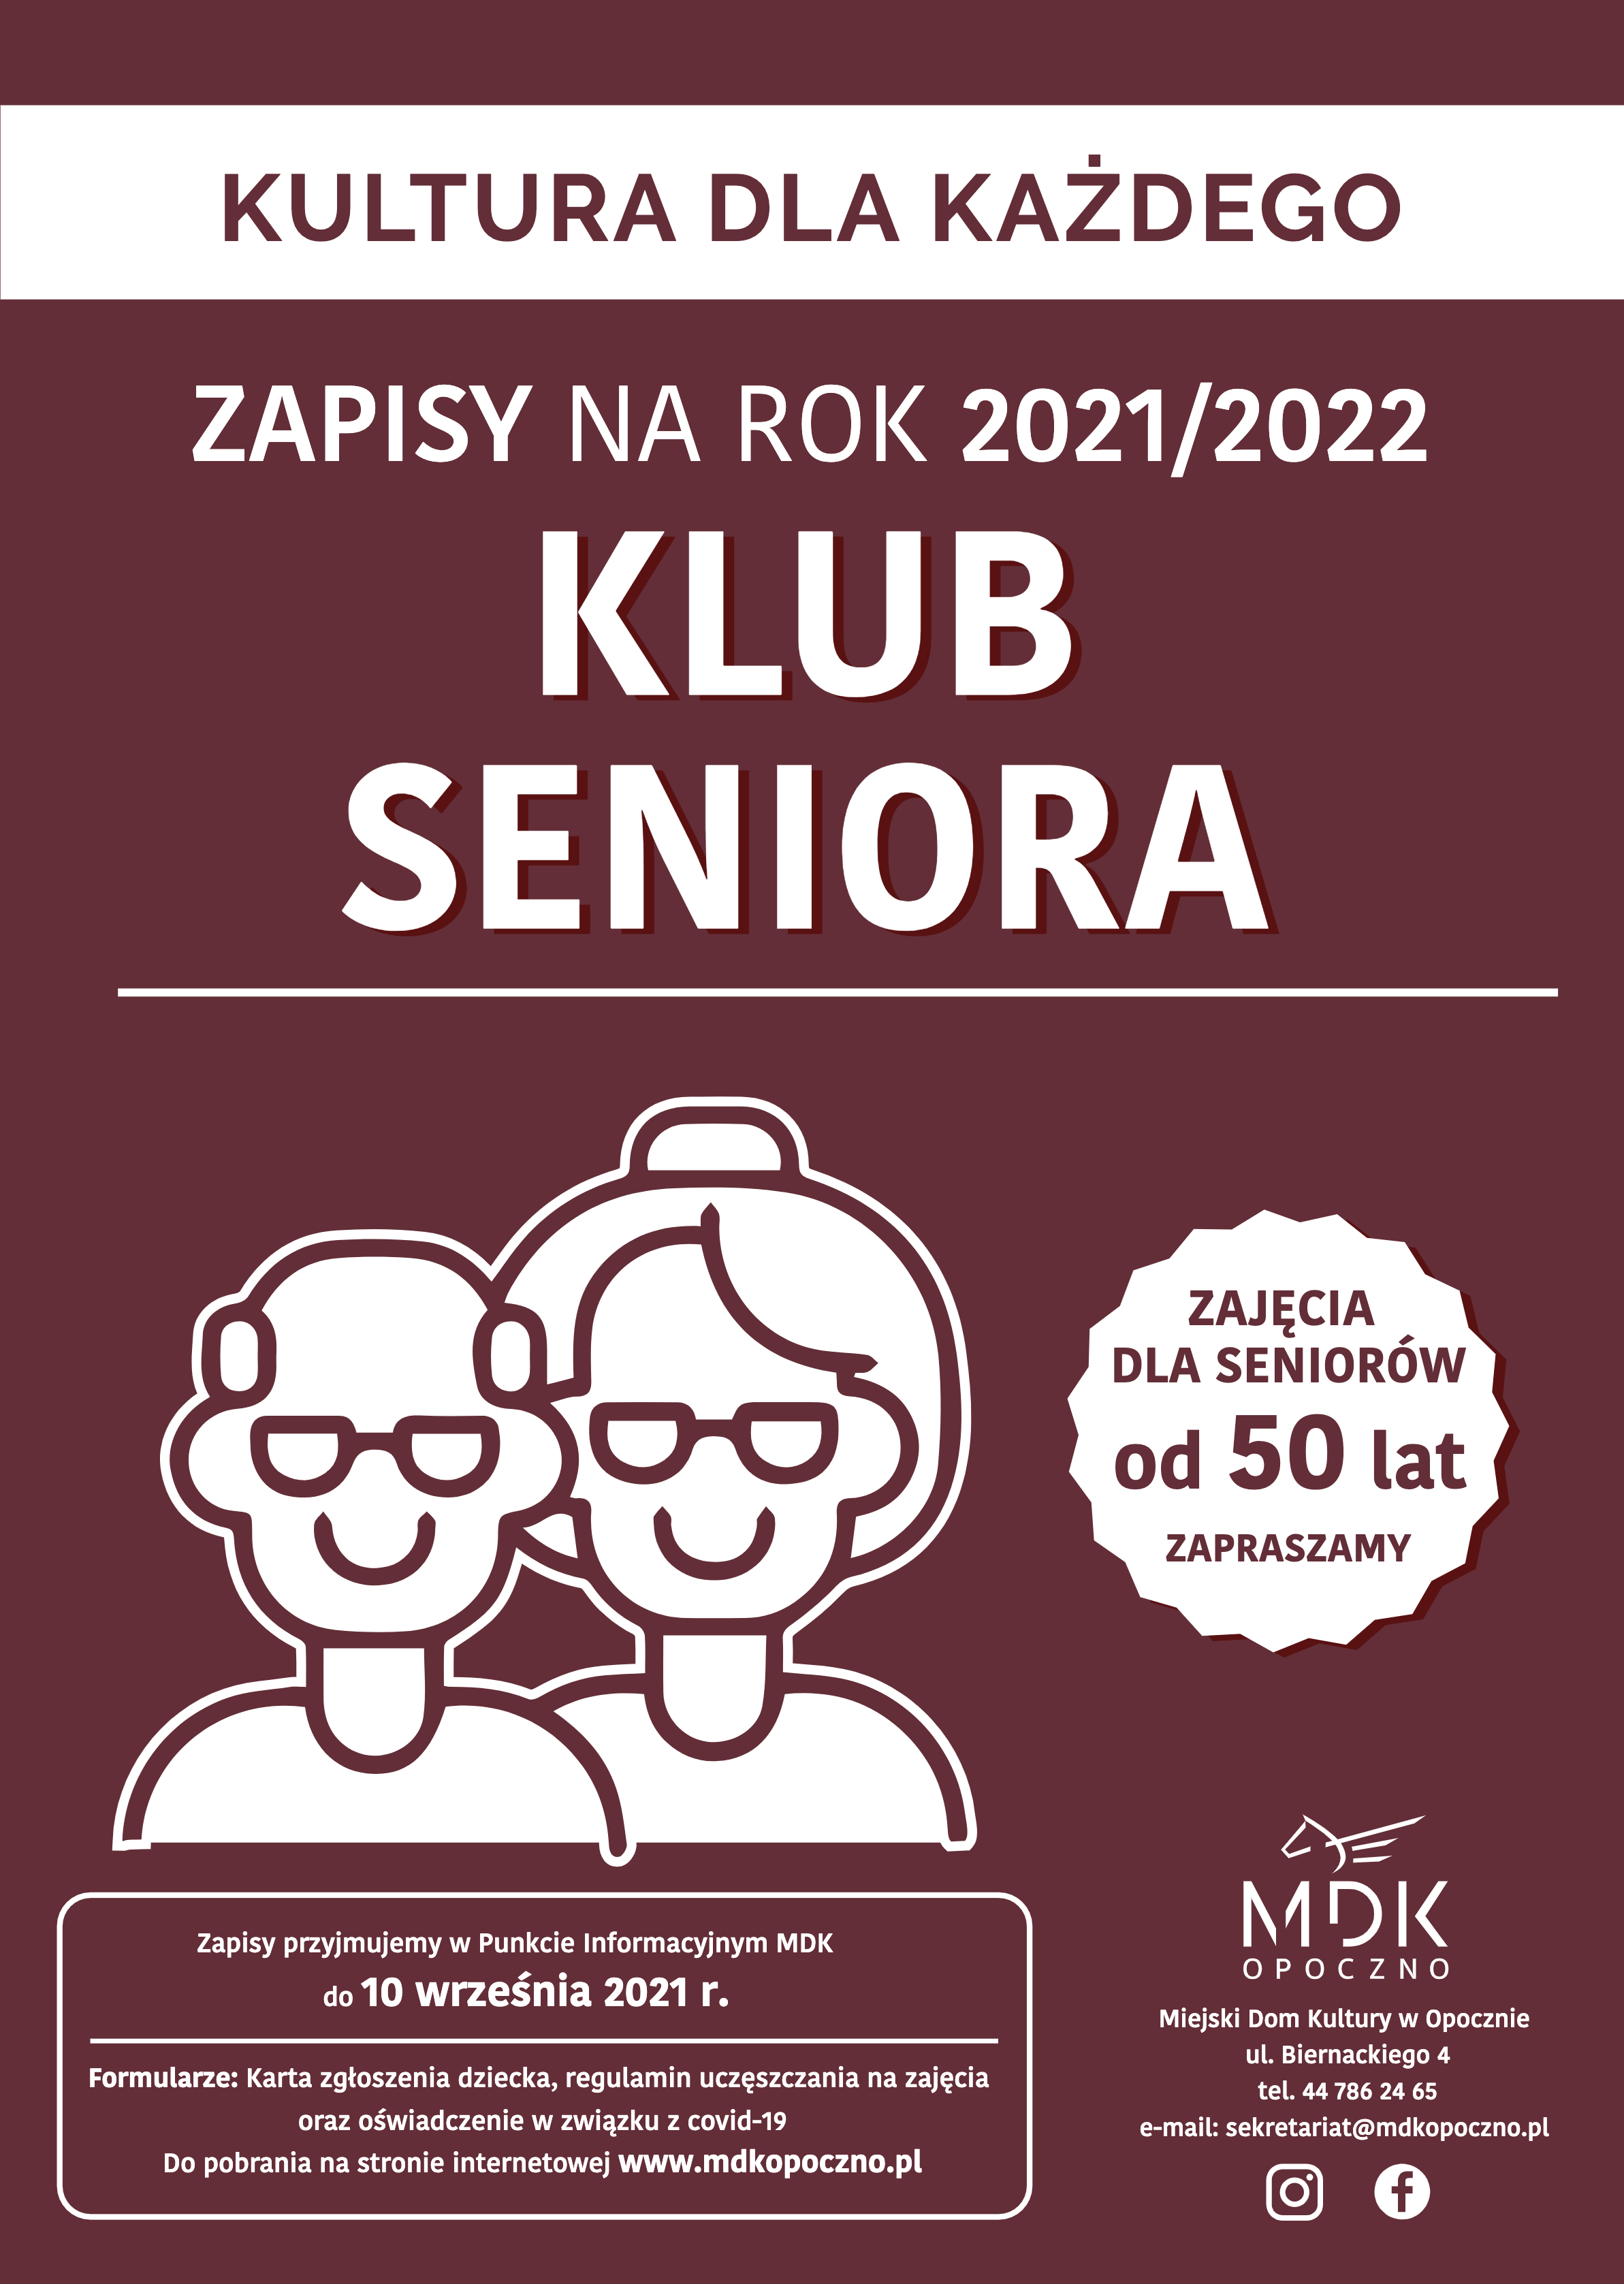 Klub Seniora